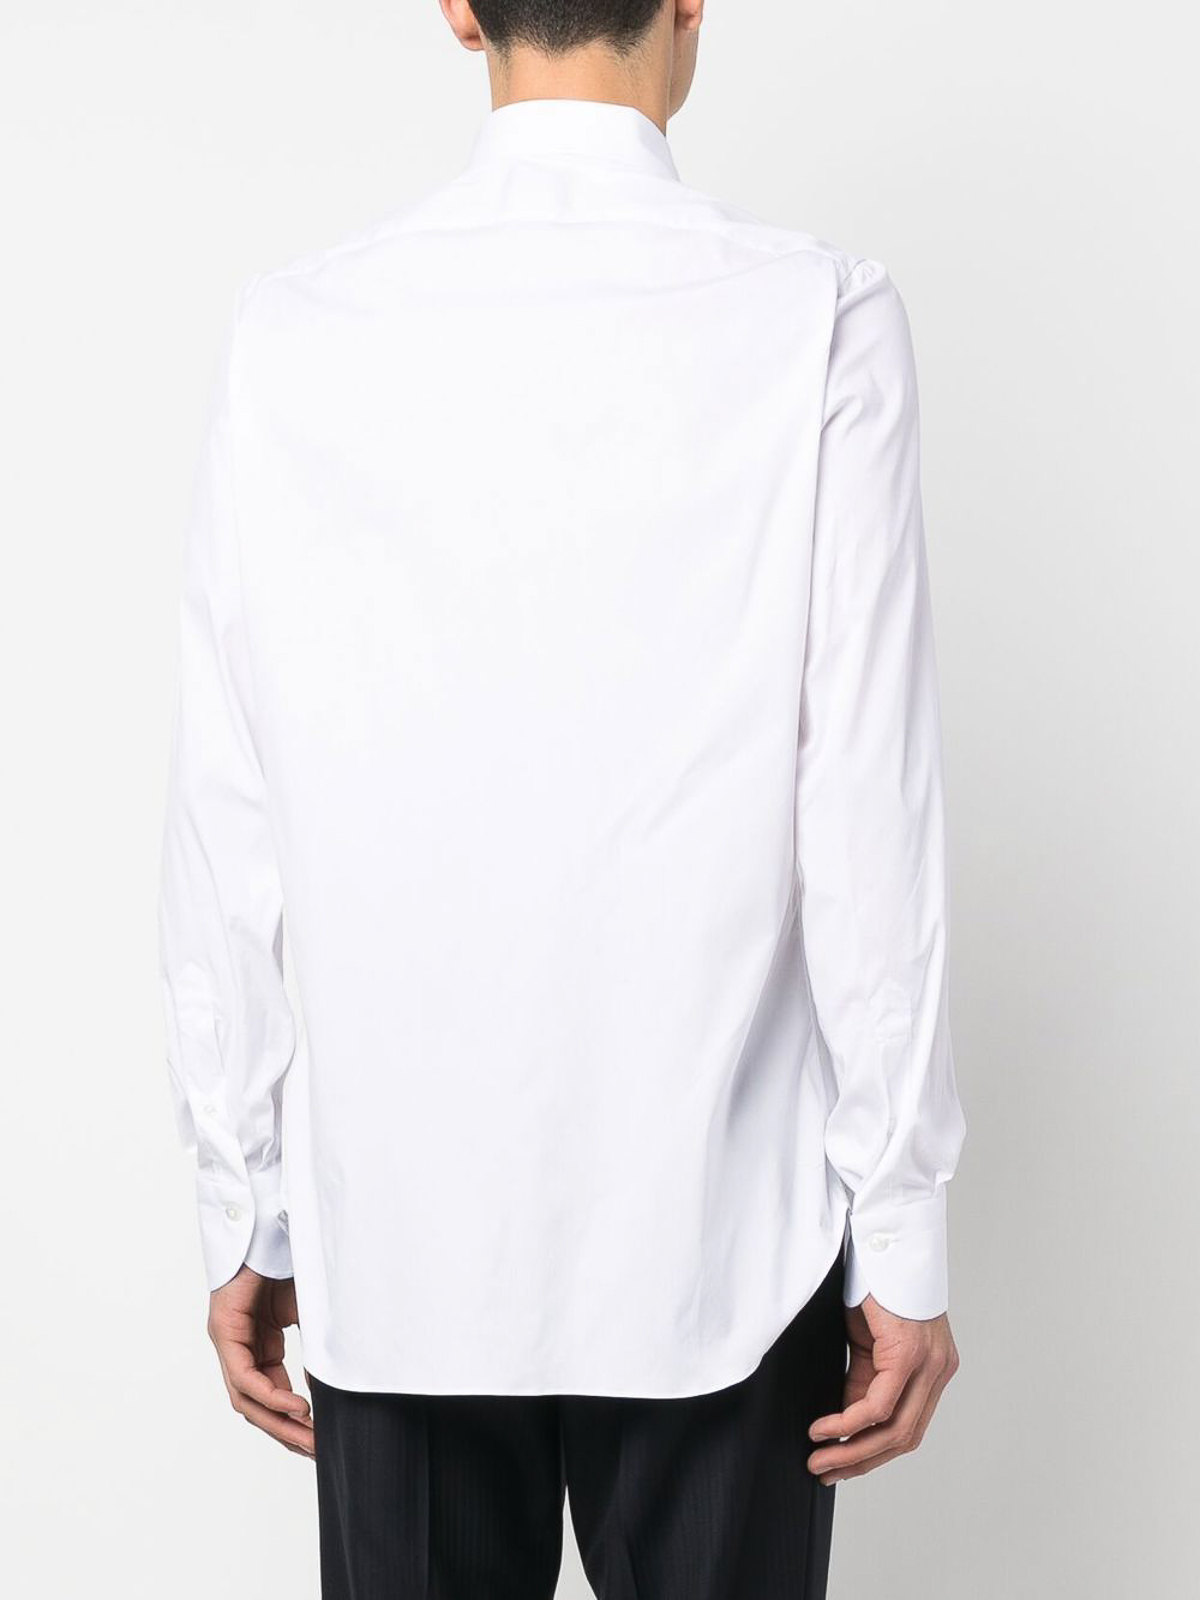 Shop Finamore 1925 Cotton Blend White Shirt